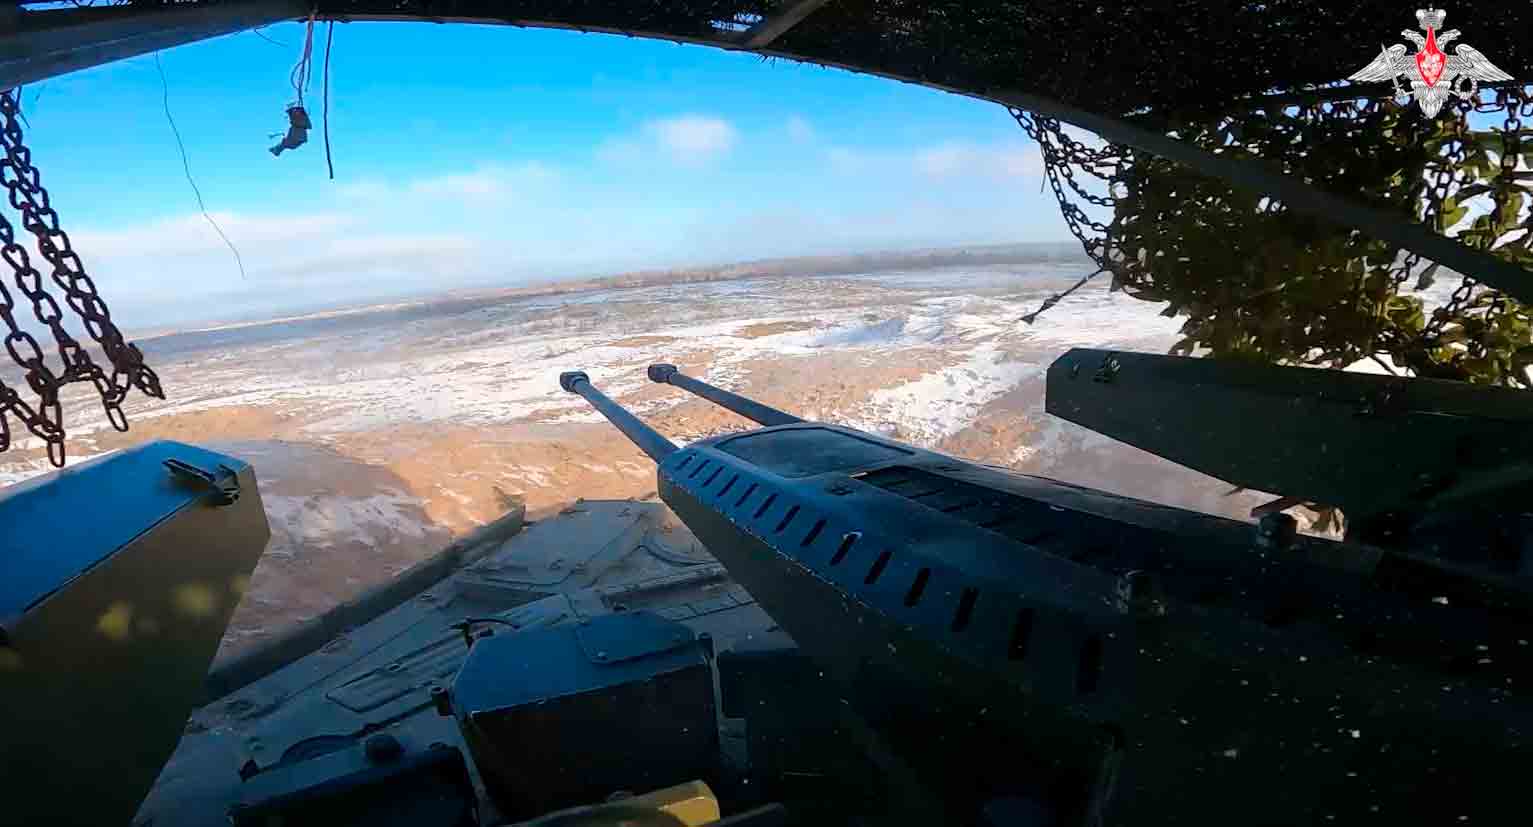 New 'Terminators' tanks arrive directly to the combat zone in Ukraine